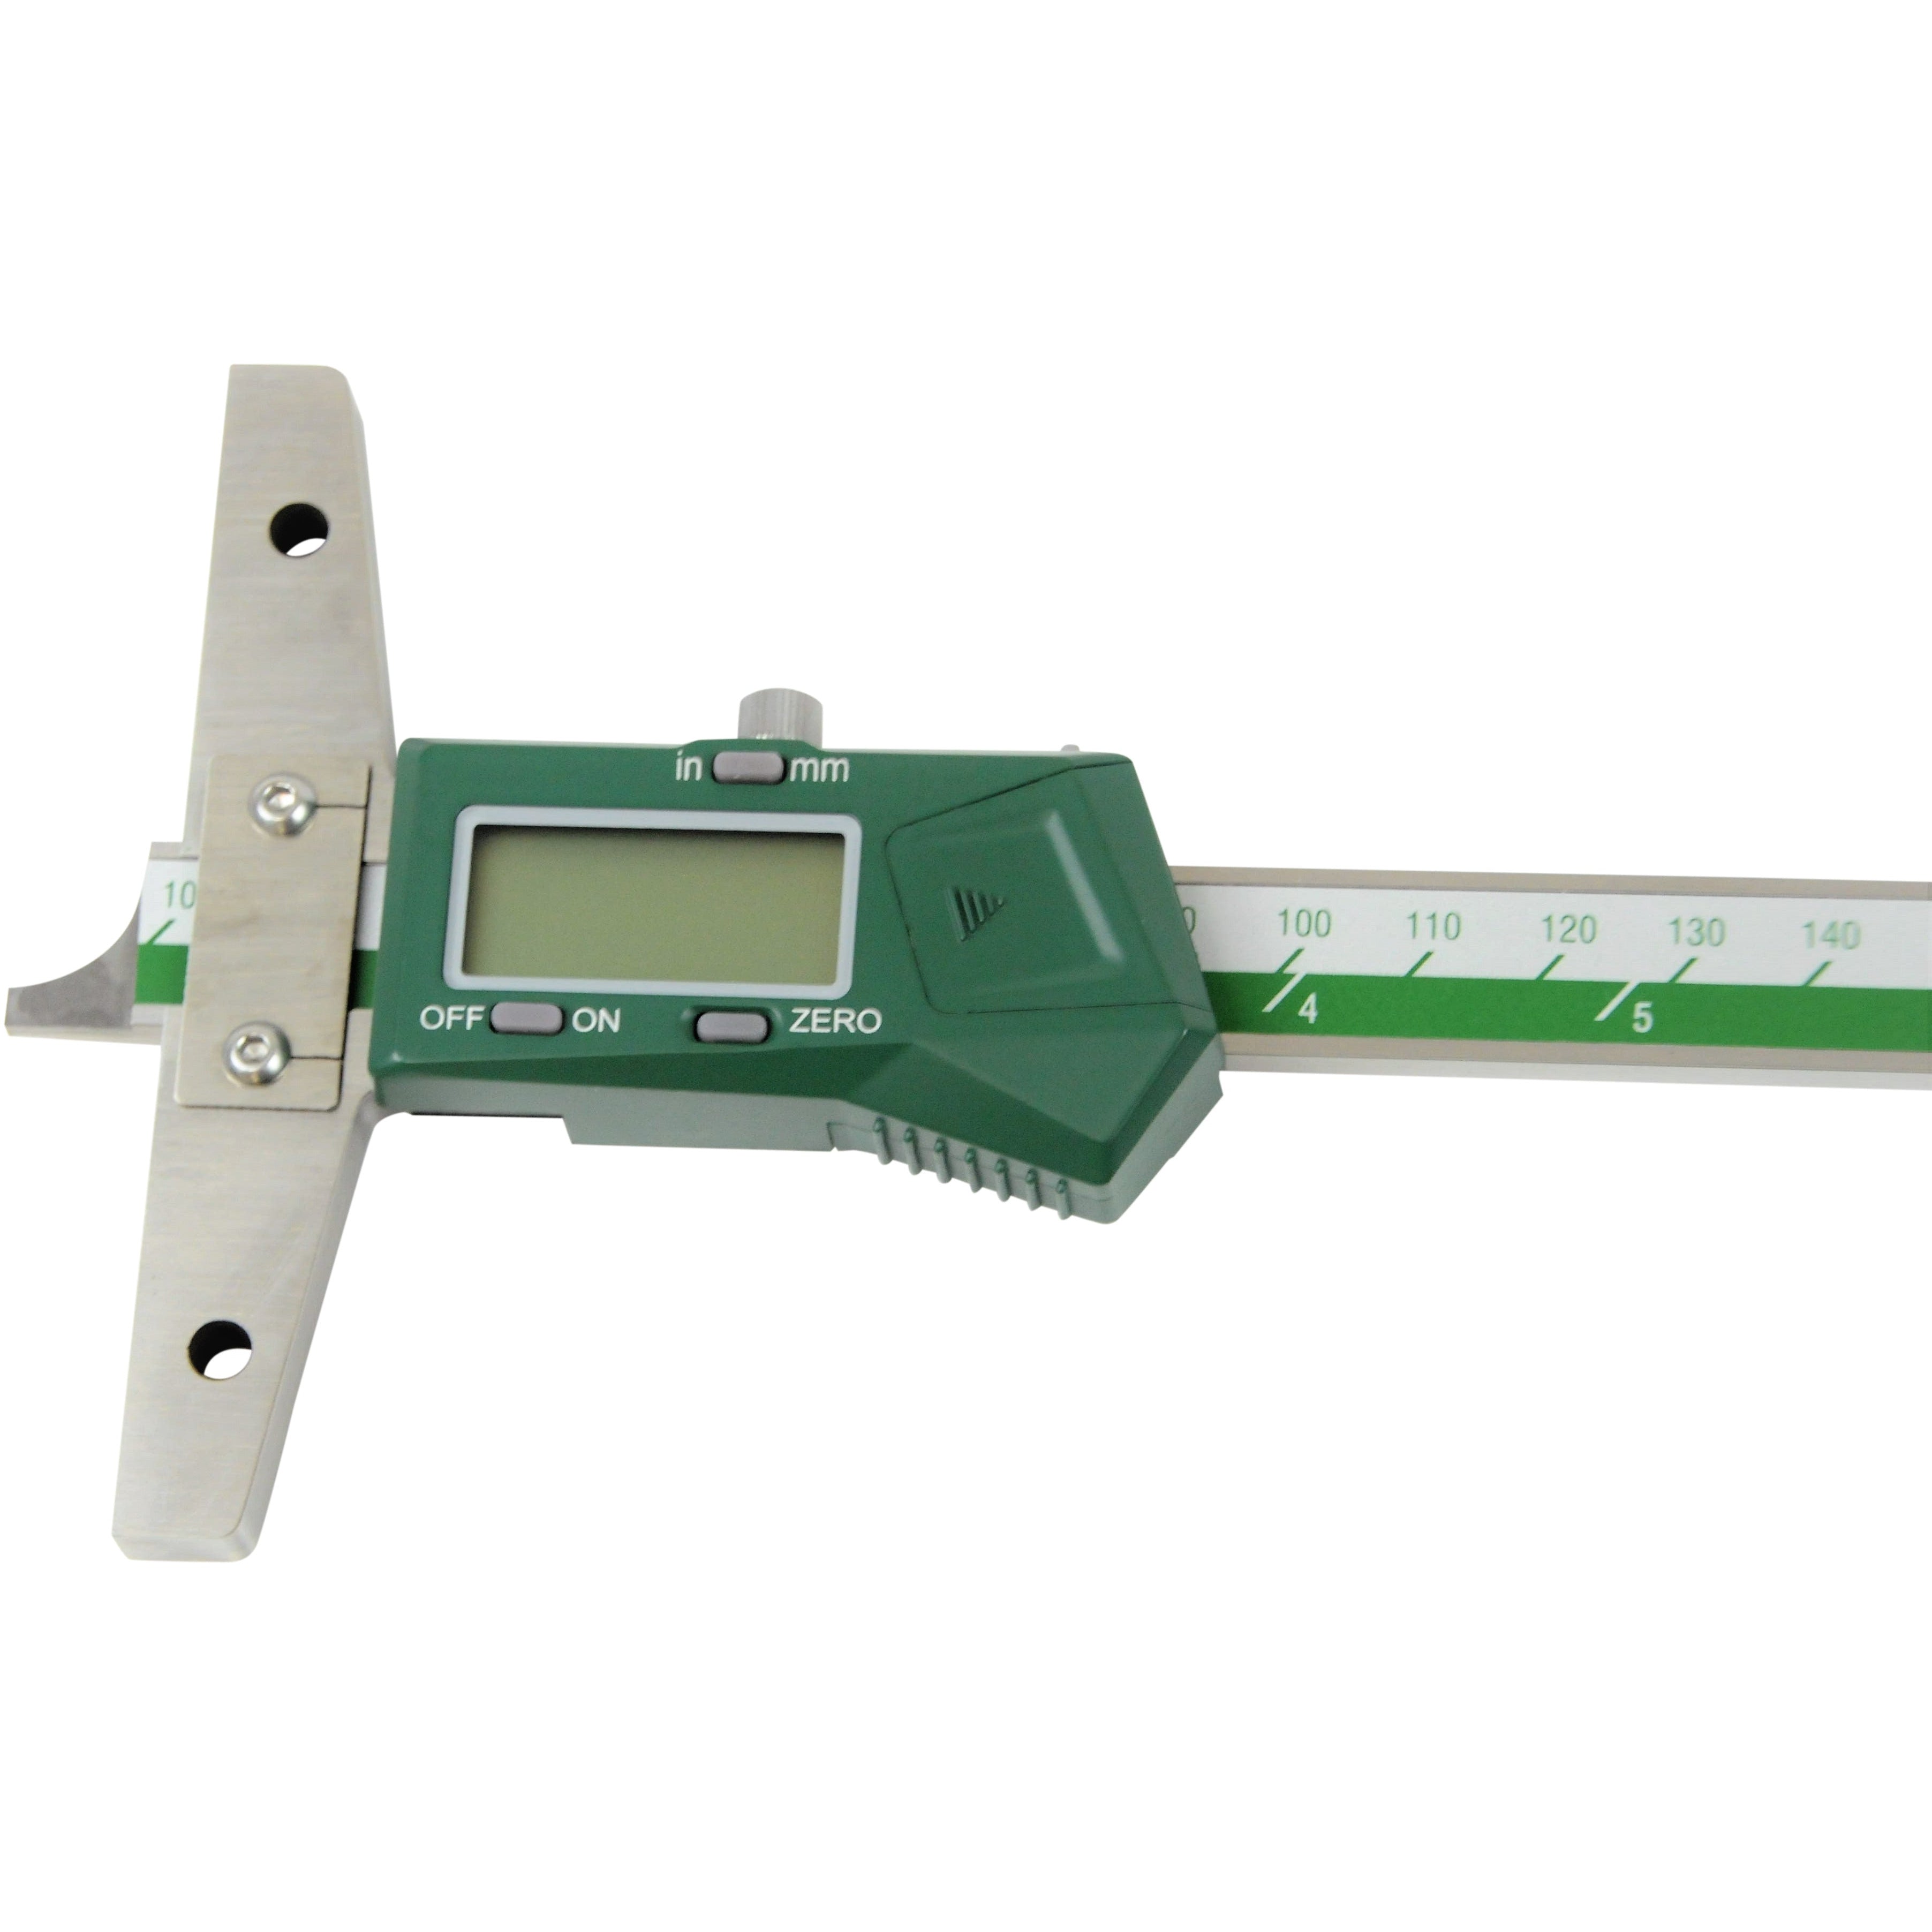 Insize Digital Depth Gauge 0-300mm / 0-12" Range Series 1147-300